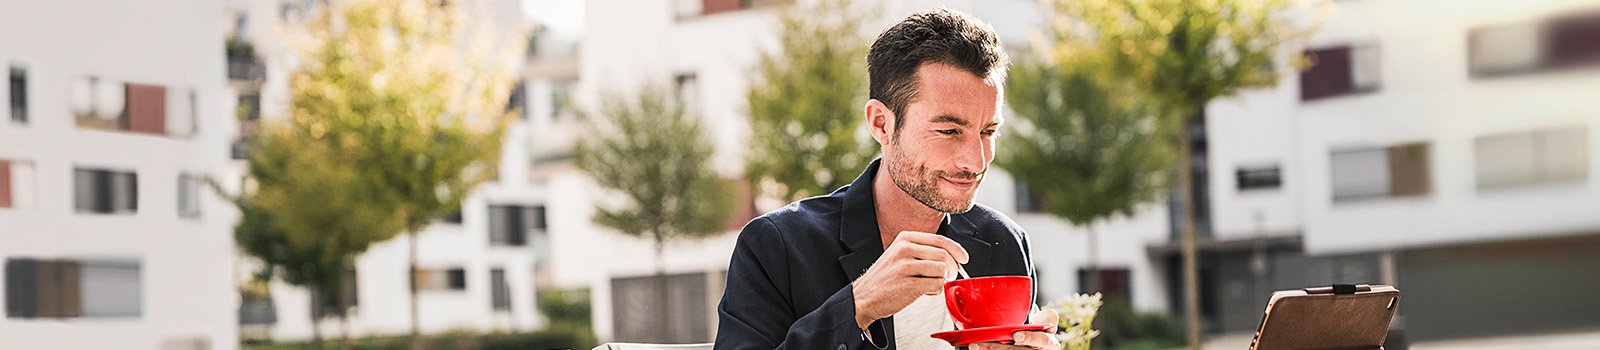 Man sitting at cafe drinking coffee